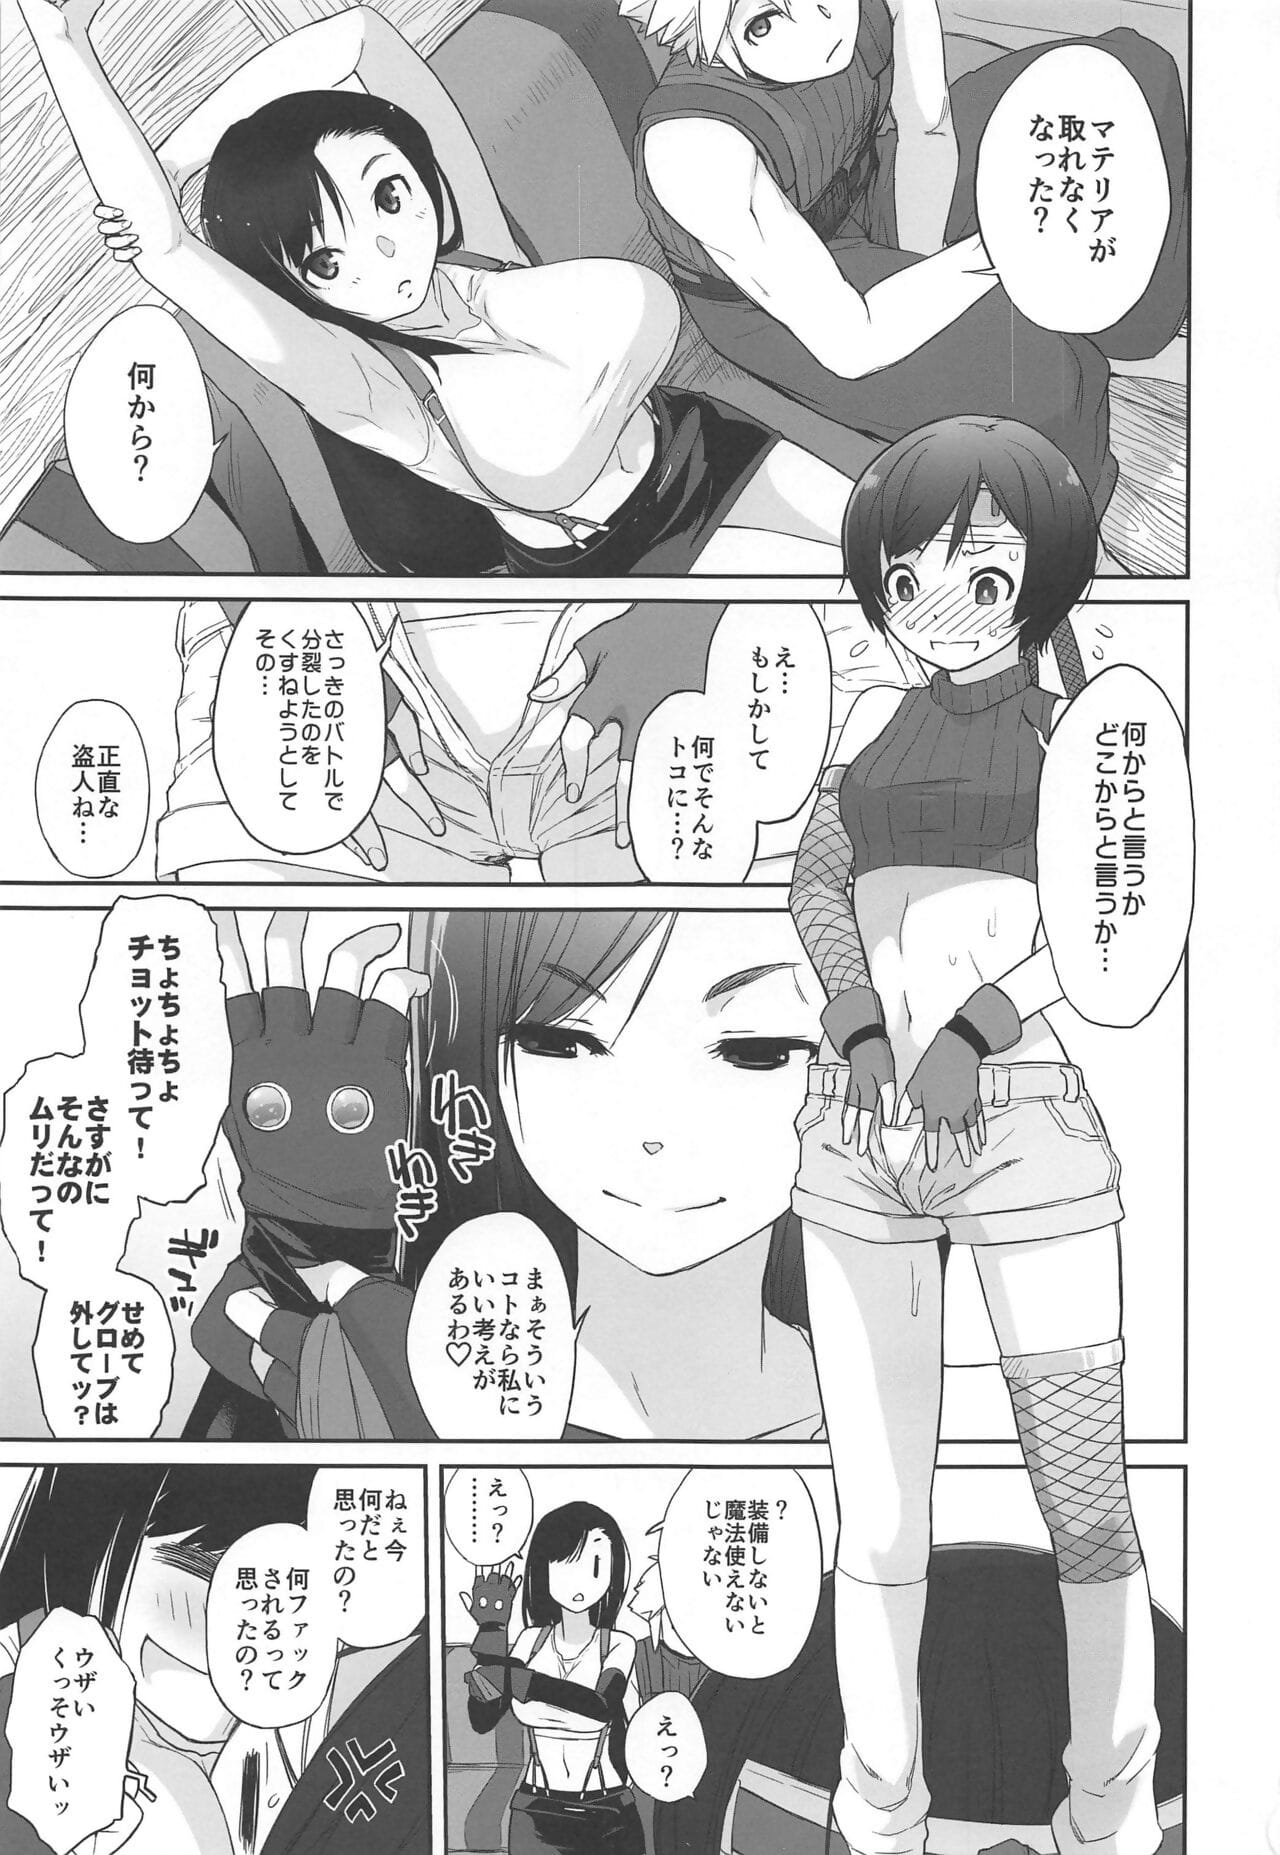 materia X Chica #2 tifa no mínimo daisakusen! page 1